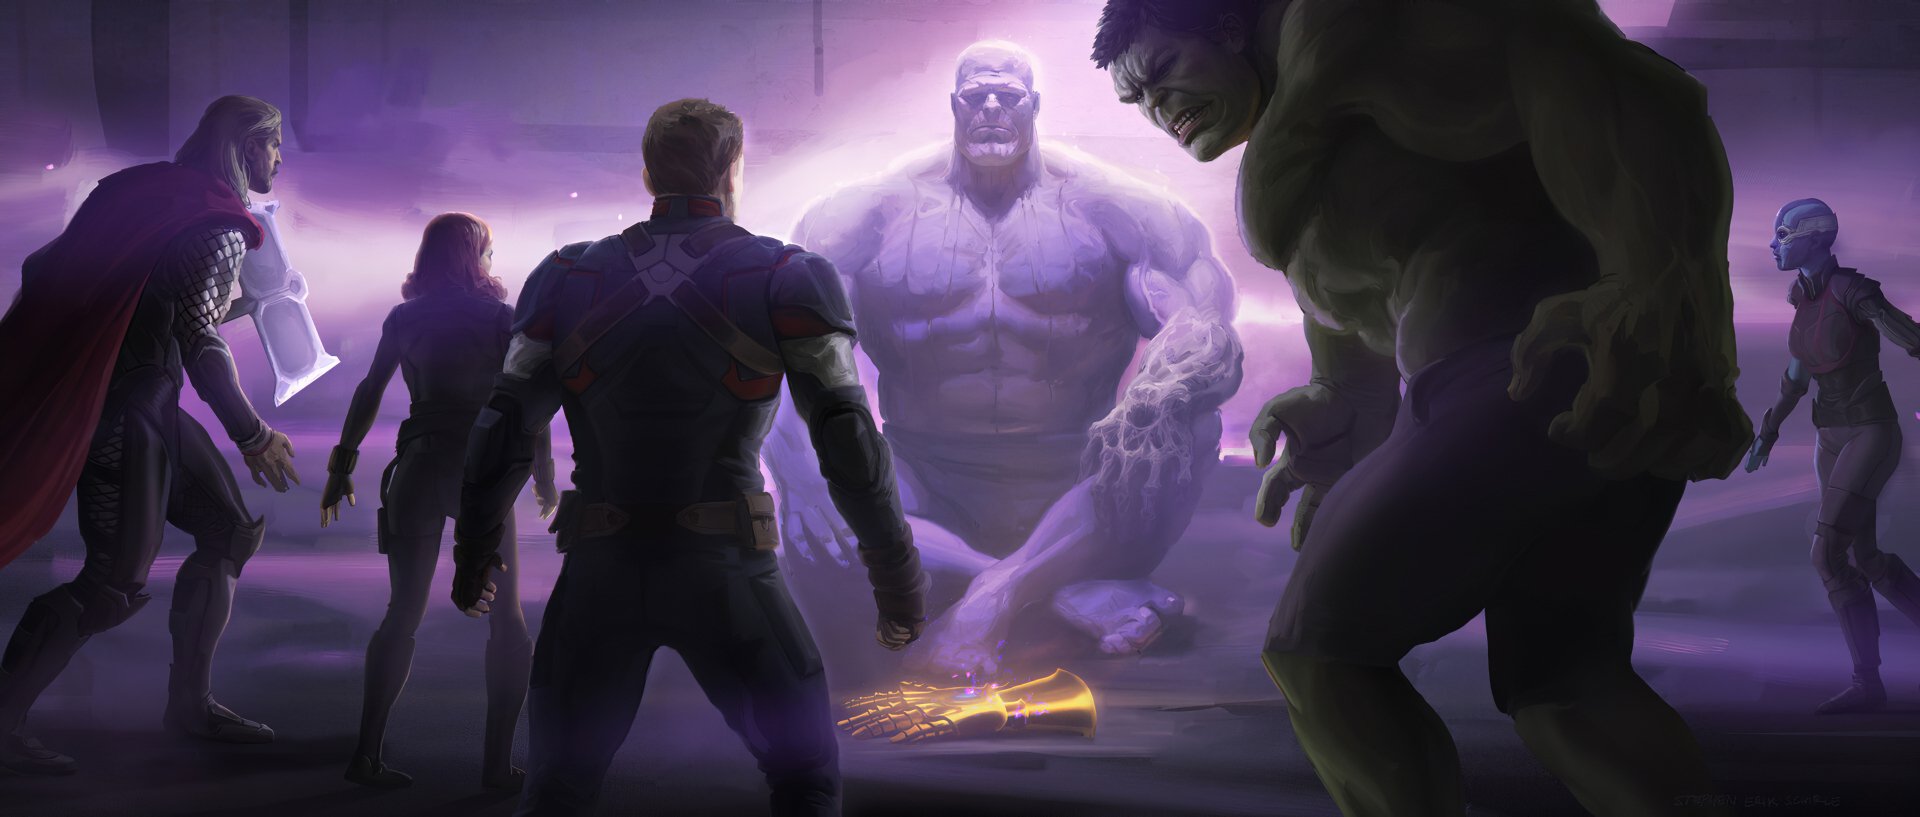 Download Infinity Gauntlet Captain America Nebula (Marvel Comics) Black Widow Thor Hulk Thanos Movie Avengers EndGame  HD Wallpaper by Stephen Schirle